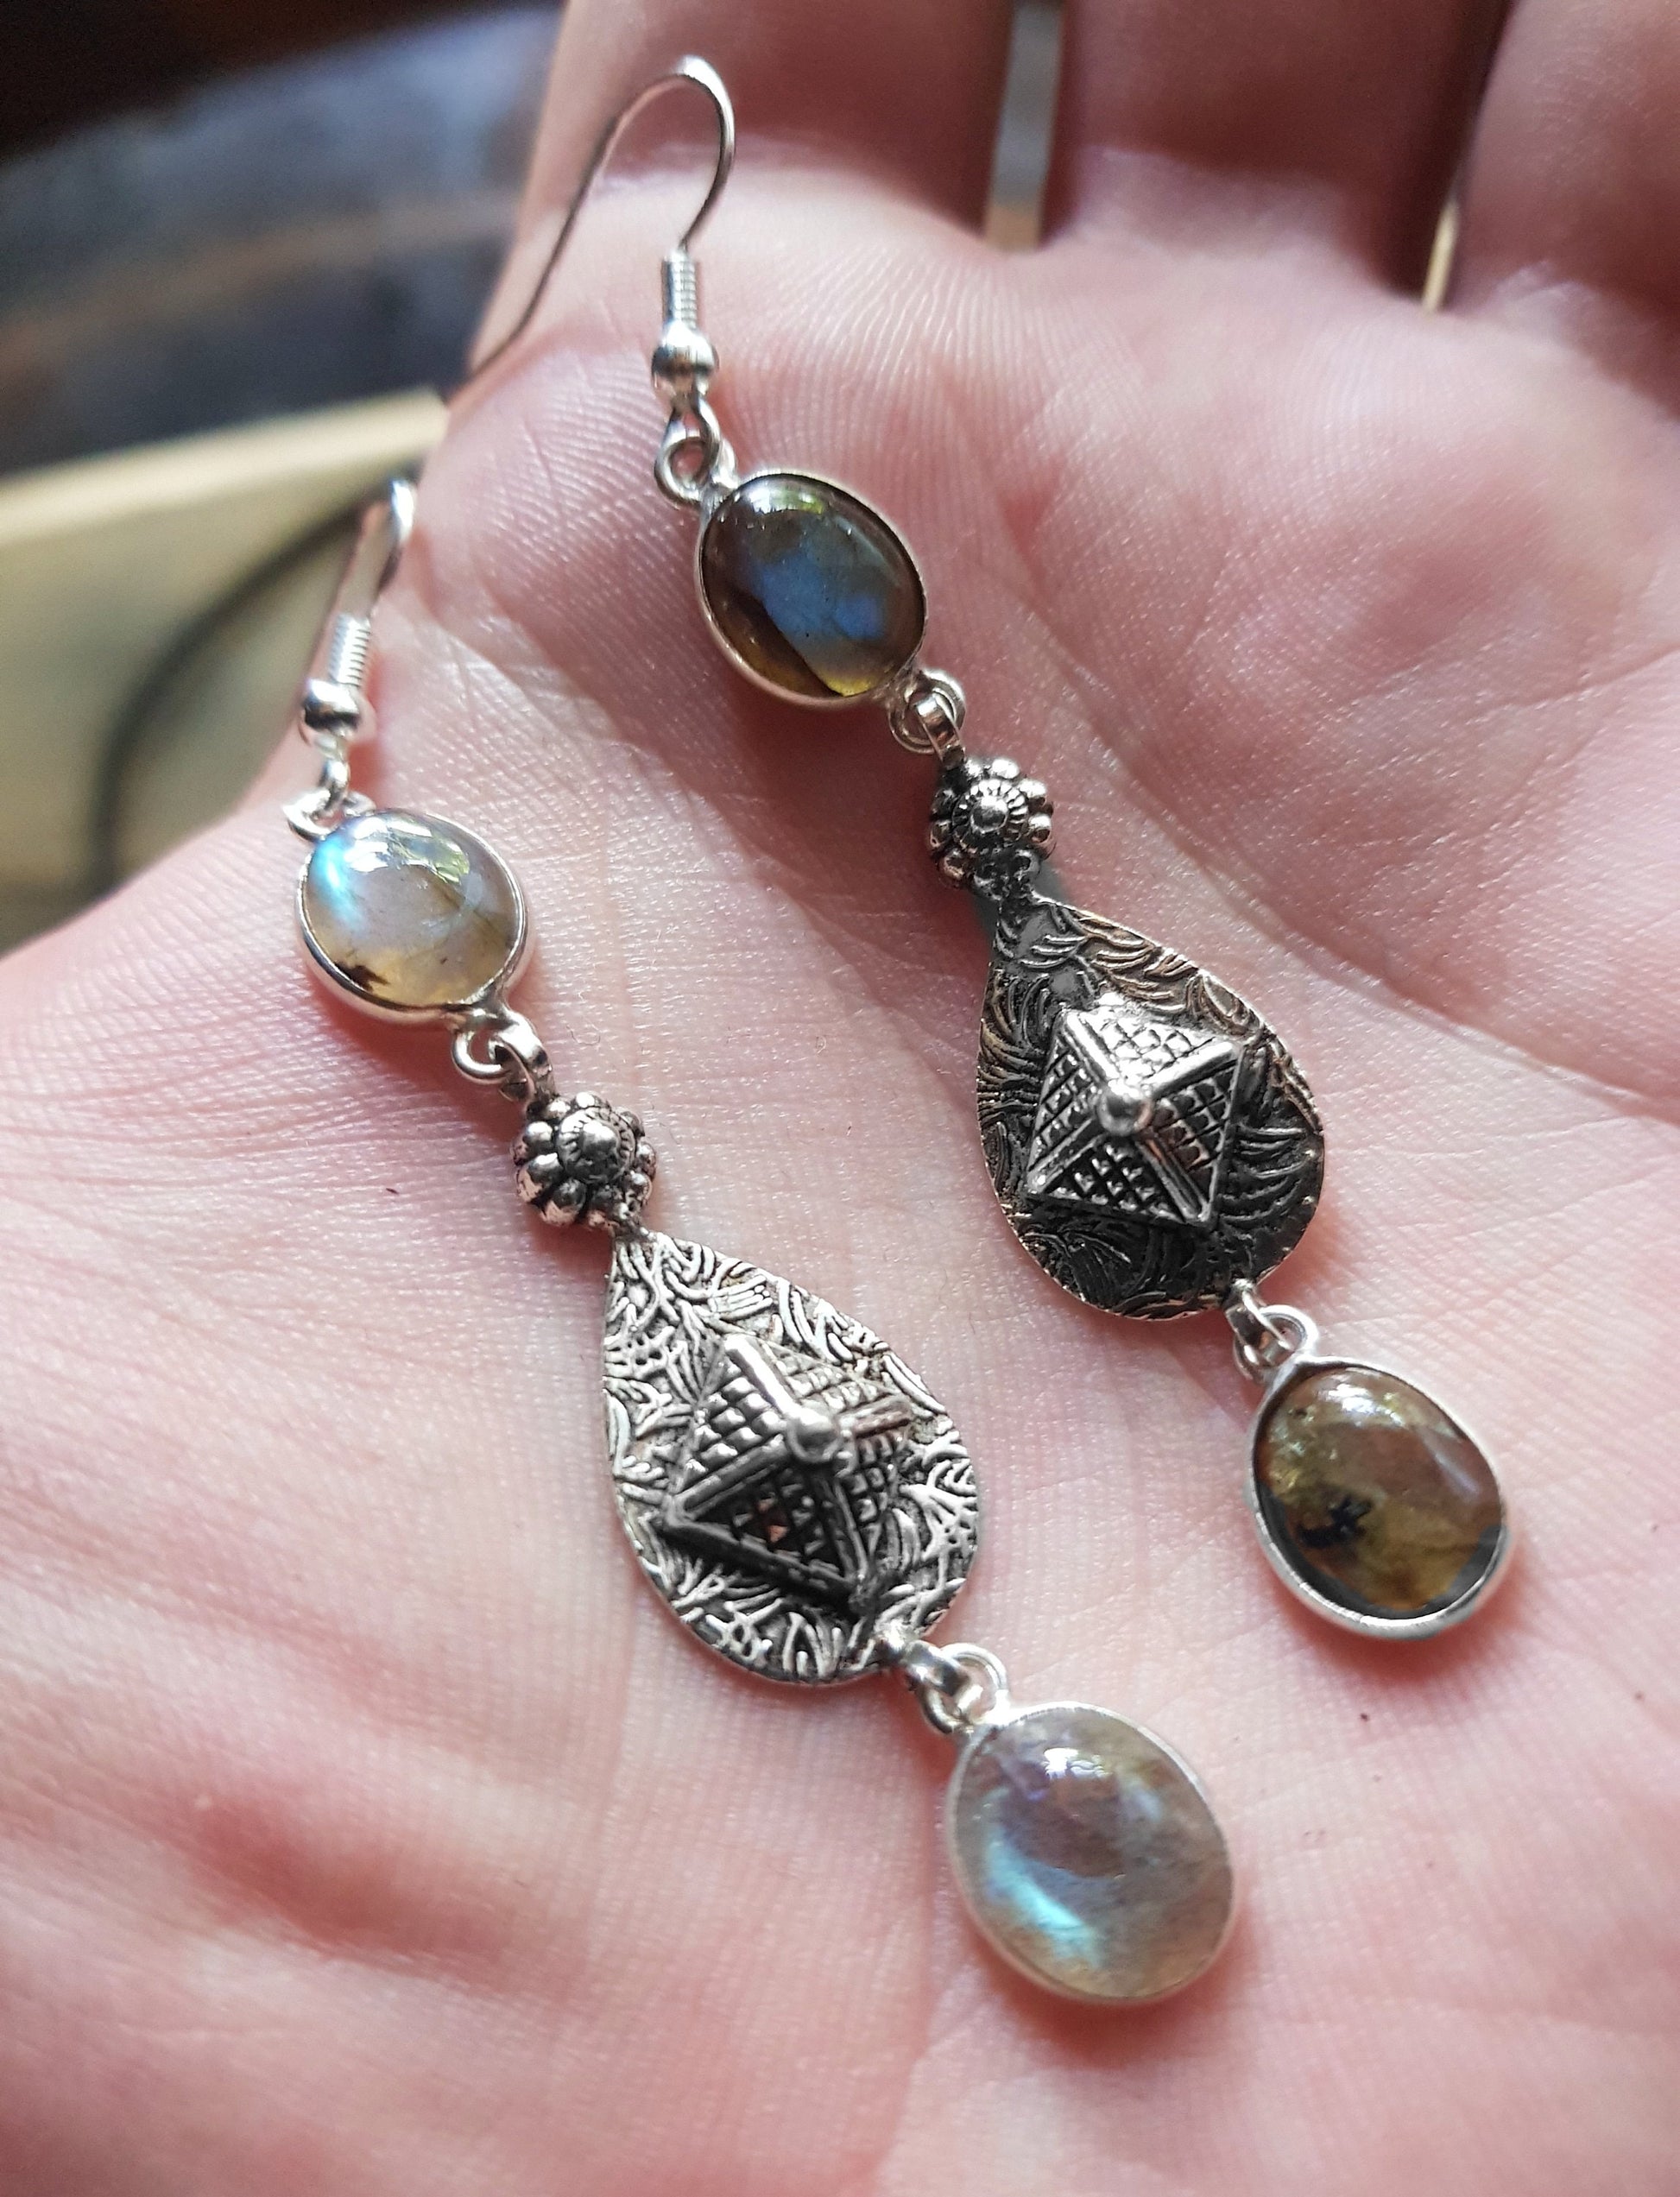 Labradorite Earrings In Sterling Silver Statement Earrings Boho Gemstone Earrings One Of A Kind Gift Mermaid Earrings